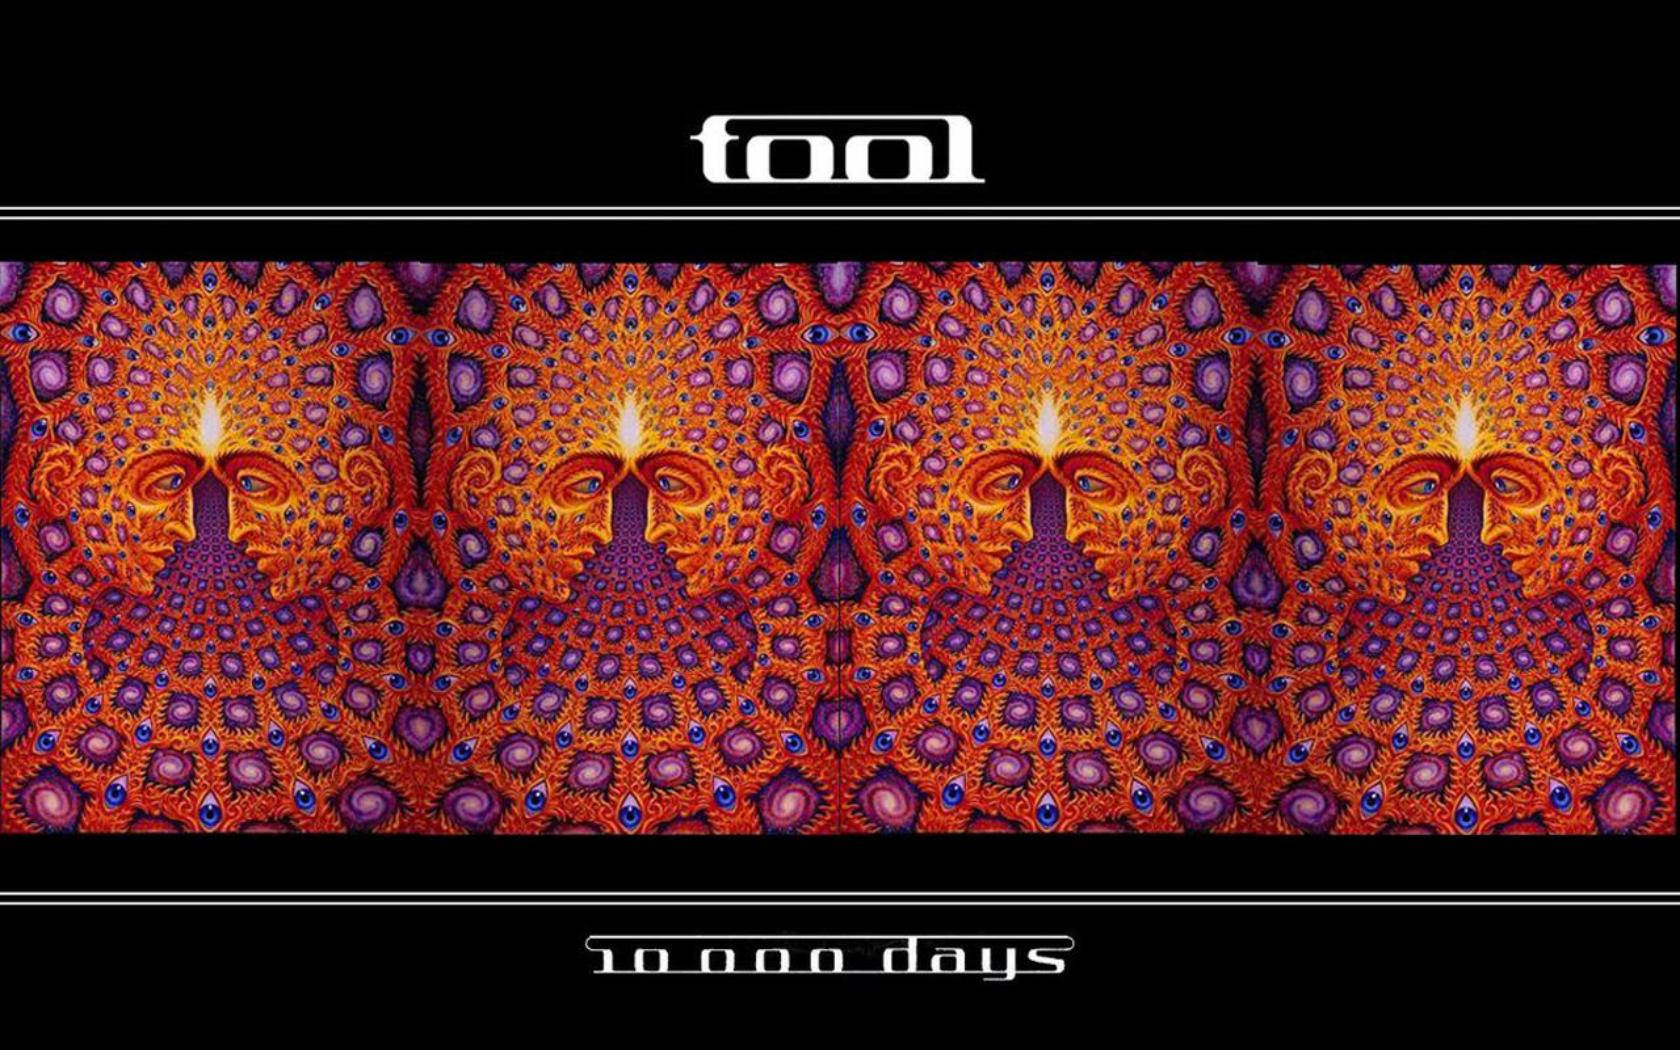 “Tool – 10,000 Days” Wallpaper